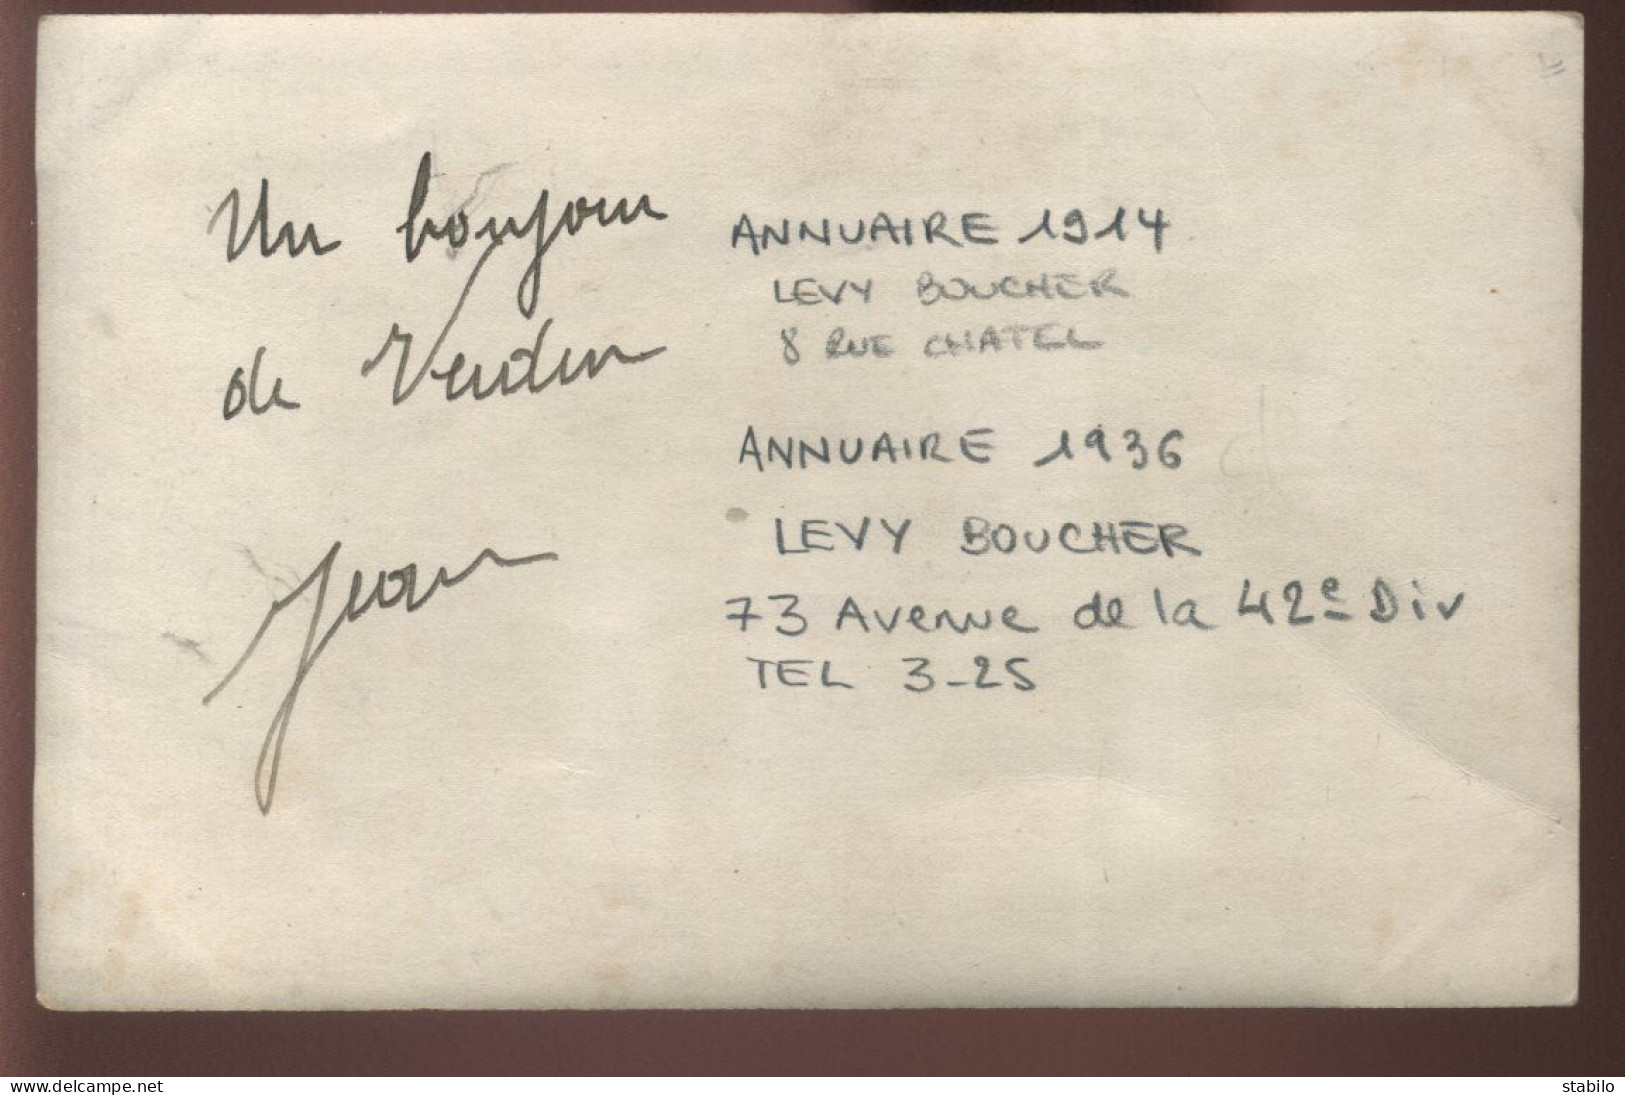 55 - VERDUN - BOUCHERIE E.LEVY- ANNUAIRE 1914 LEVY BOUCHER 8 RUE CHATEL - ANNUAIRE 1936 73 AV DE LA 42E DIV TEL 3-25 - Verdun